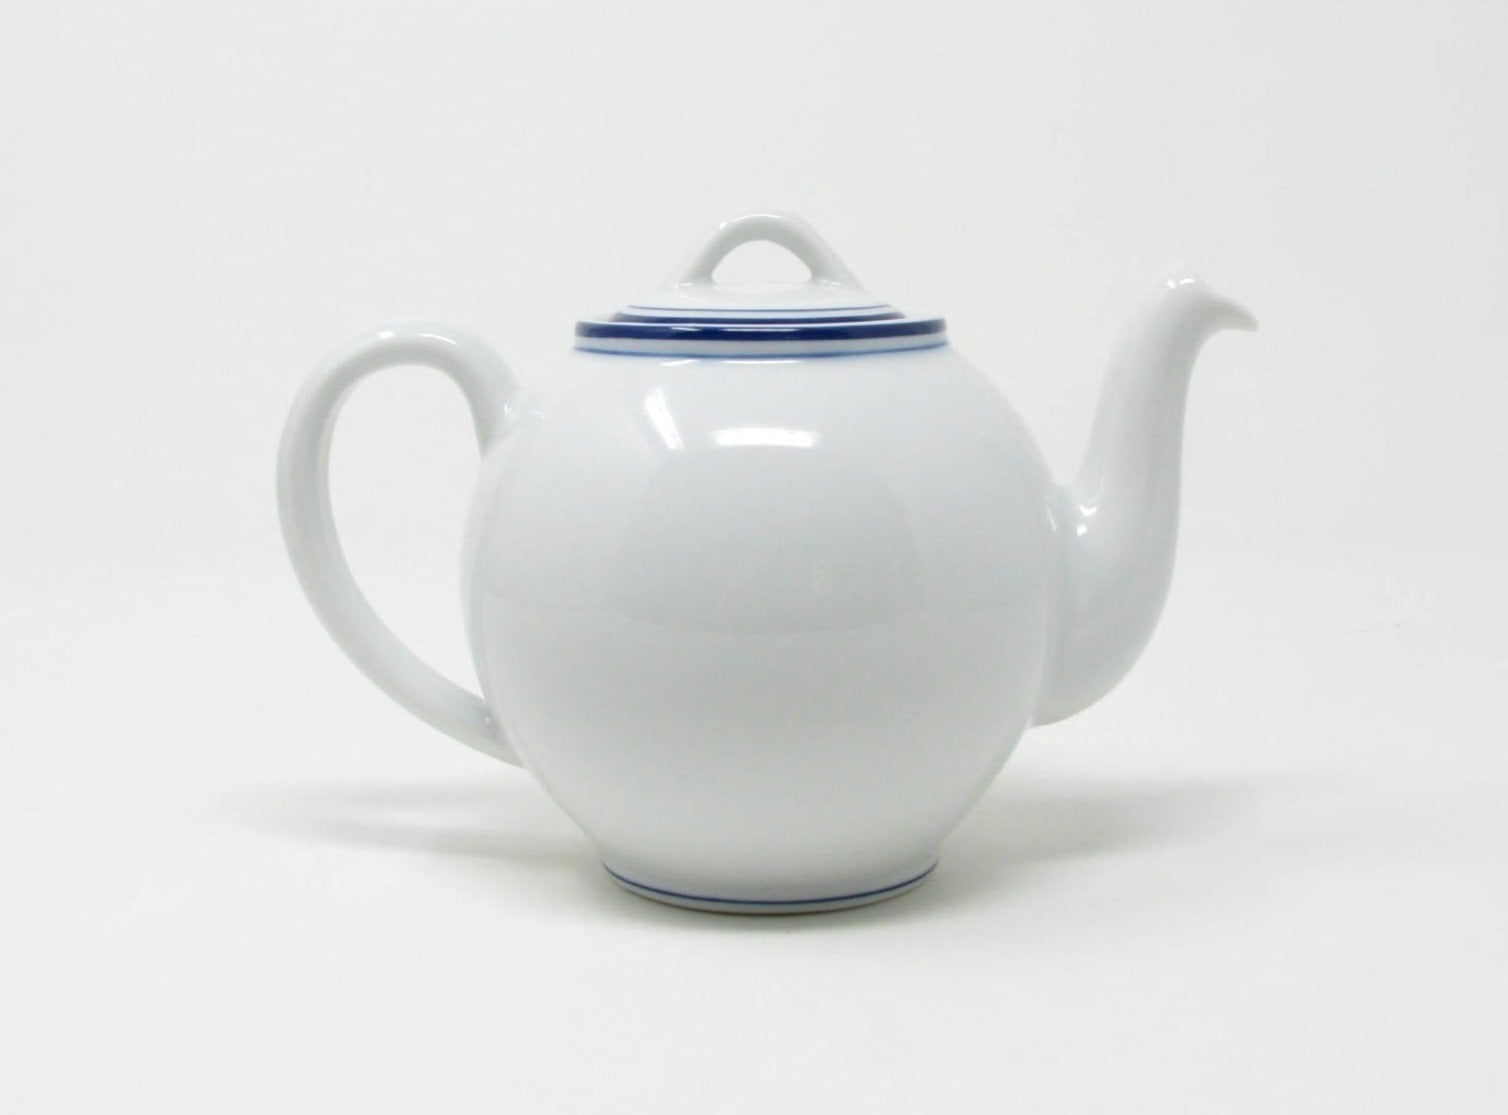 Vintage Pillivuyt France Porcelain Teapot with Blue Floral Pattern